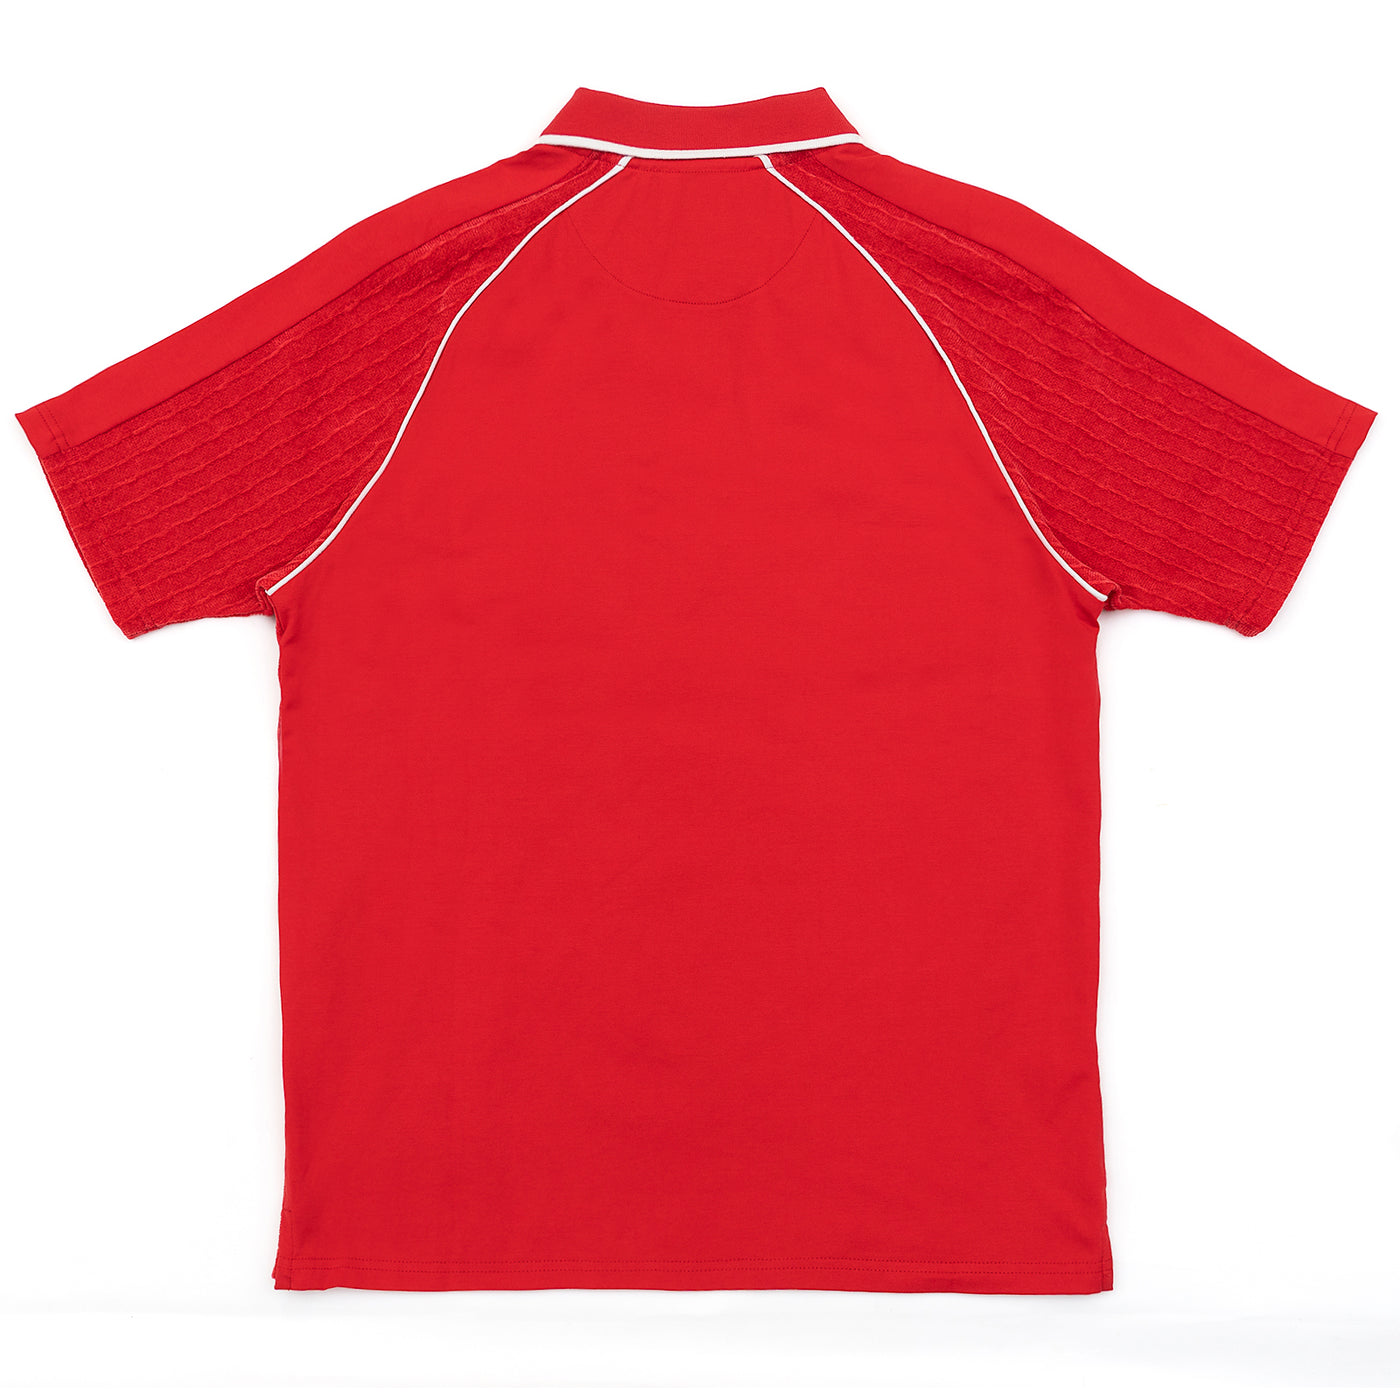 M394 Makobi Daniali Polo Shirt- Red